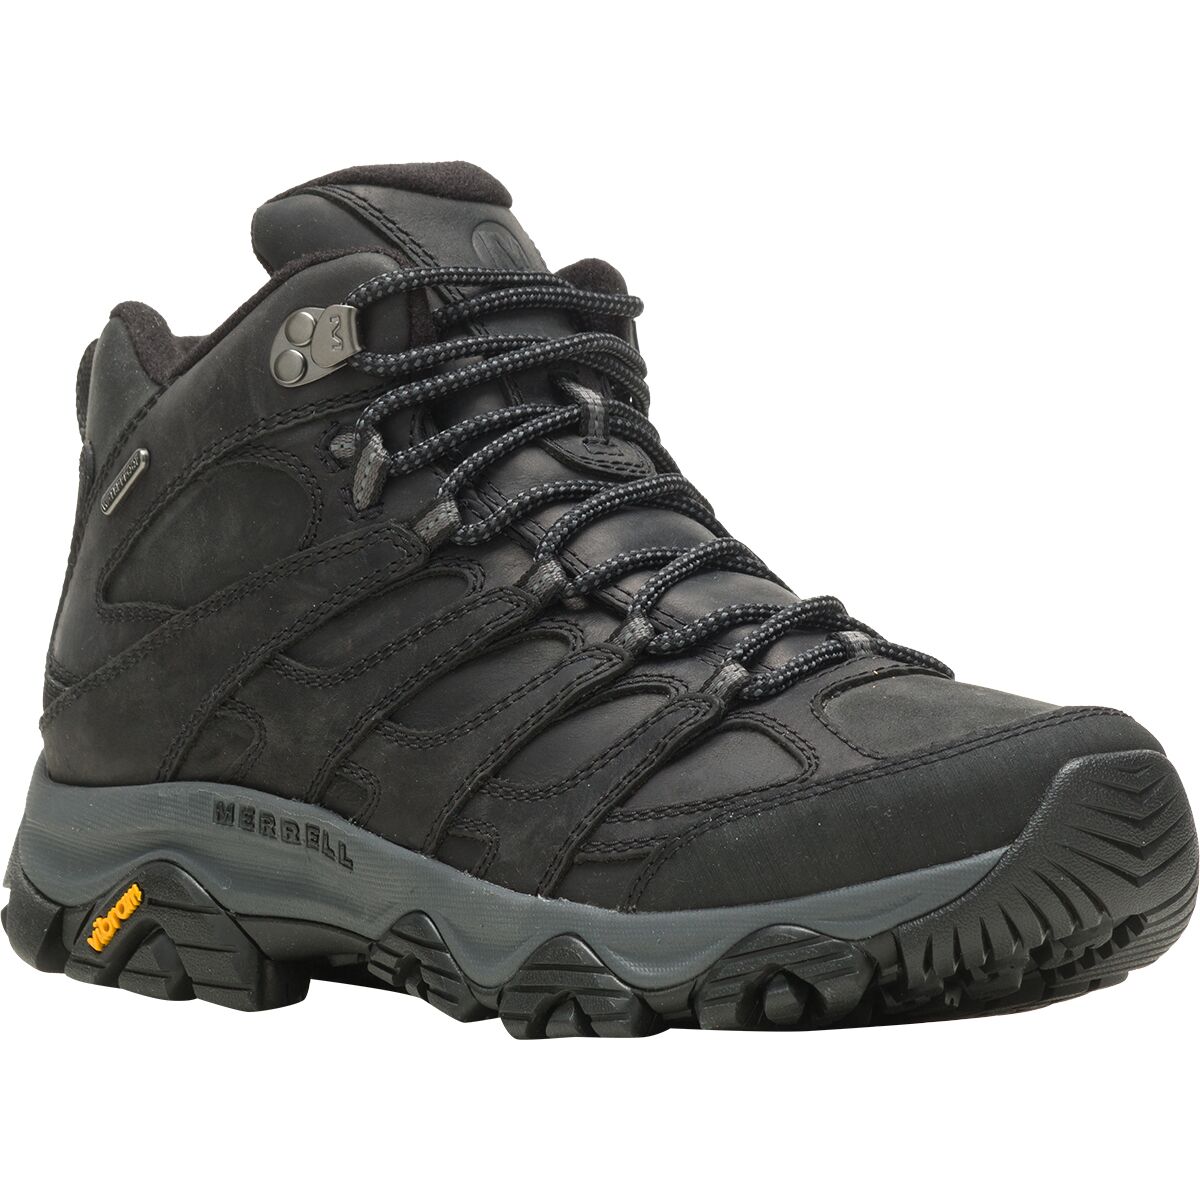 Merrell Moab 3 Prime Mid WP Hiking Boot - Men's - Footwear